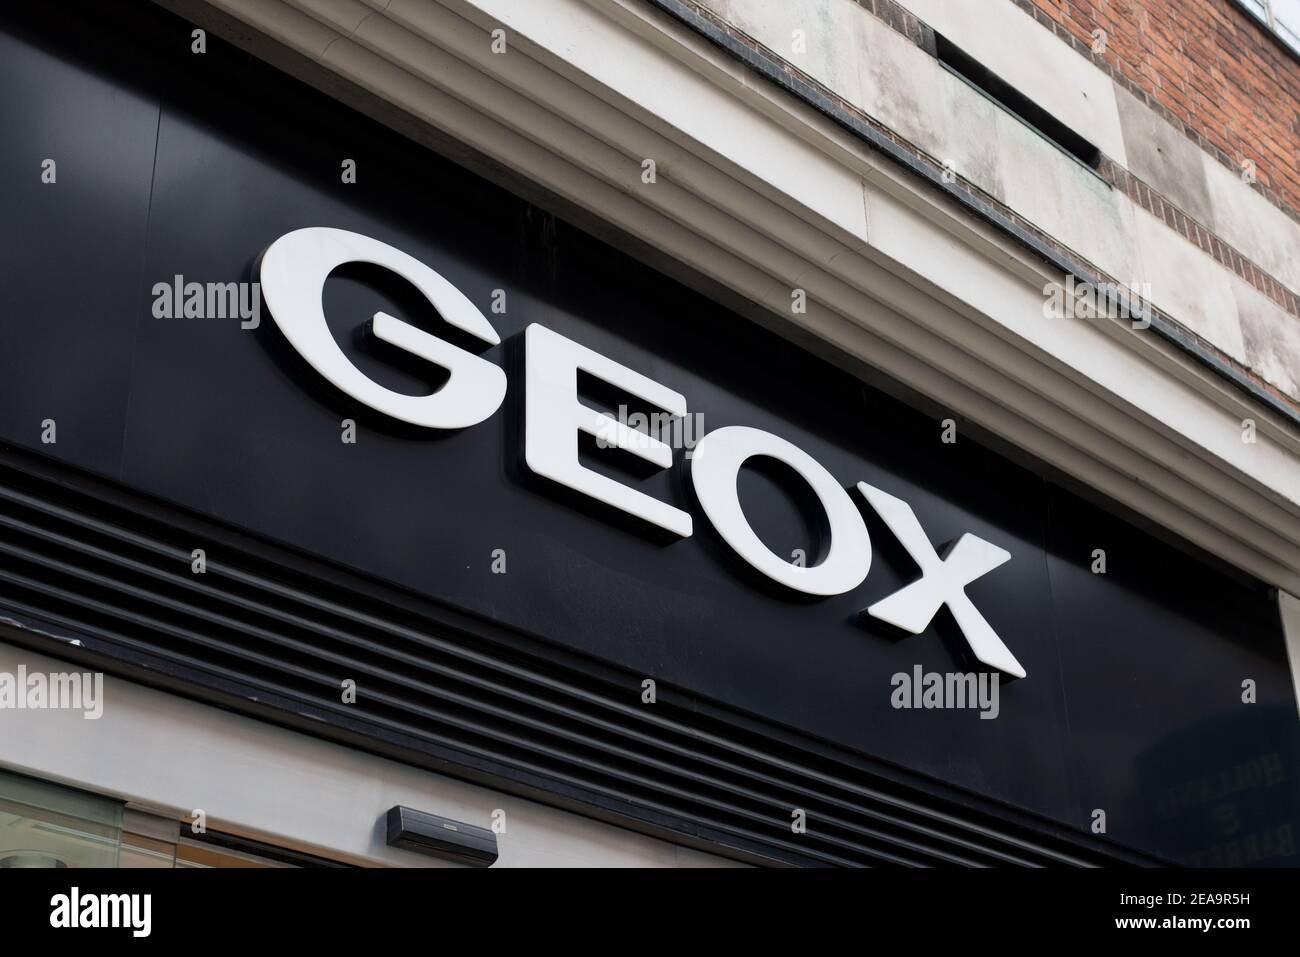 Logo Shop Store Sign Brand Front Retail Retailer Shoe Shop Geox, 530 Oxford  Street, London W1C 1LP Stock Photo - Alamy